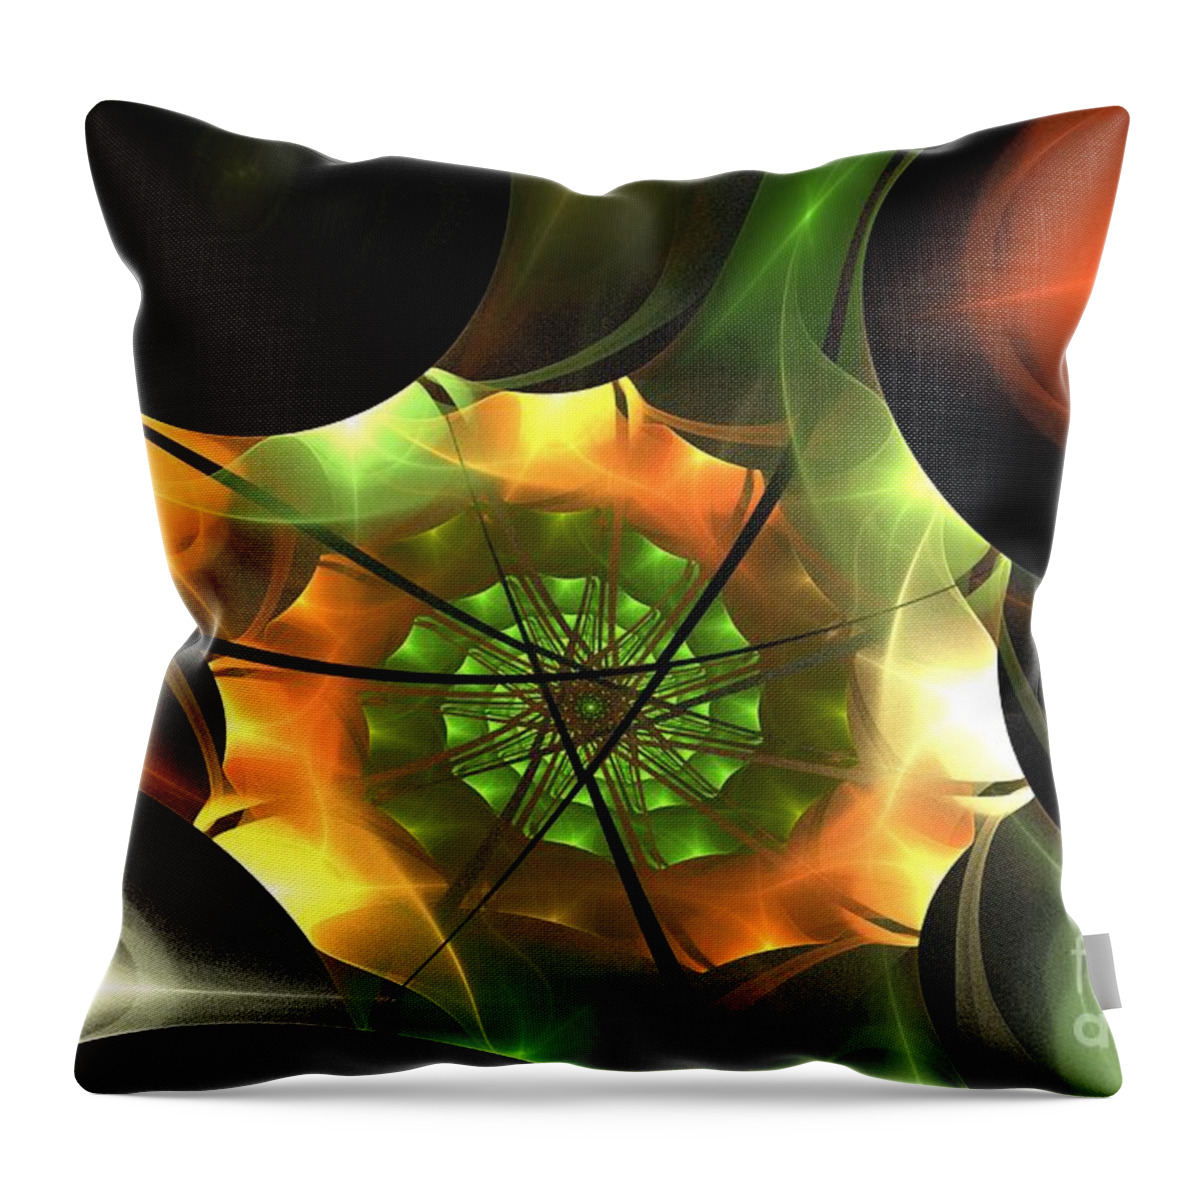 Apophysis Throw Pillow featuring the digital art Orange Gold Layer Spiral by Kim Sy Ok